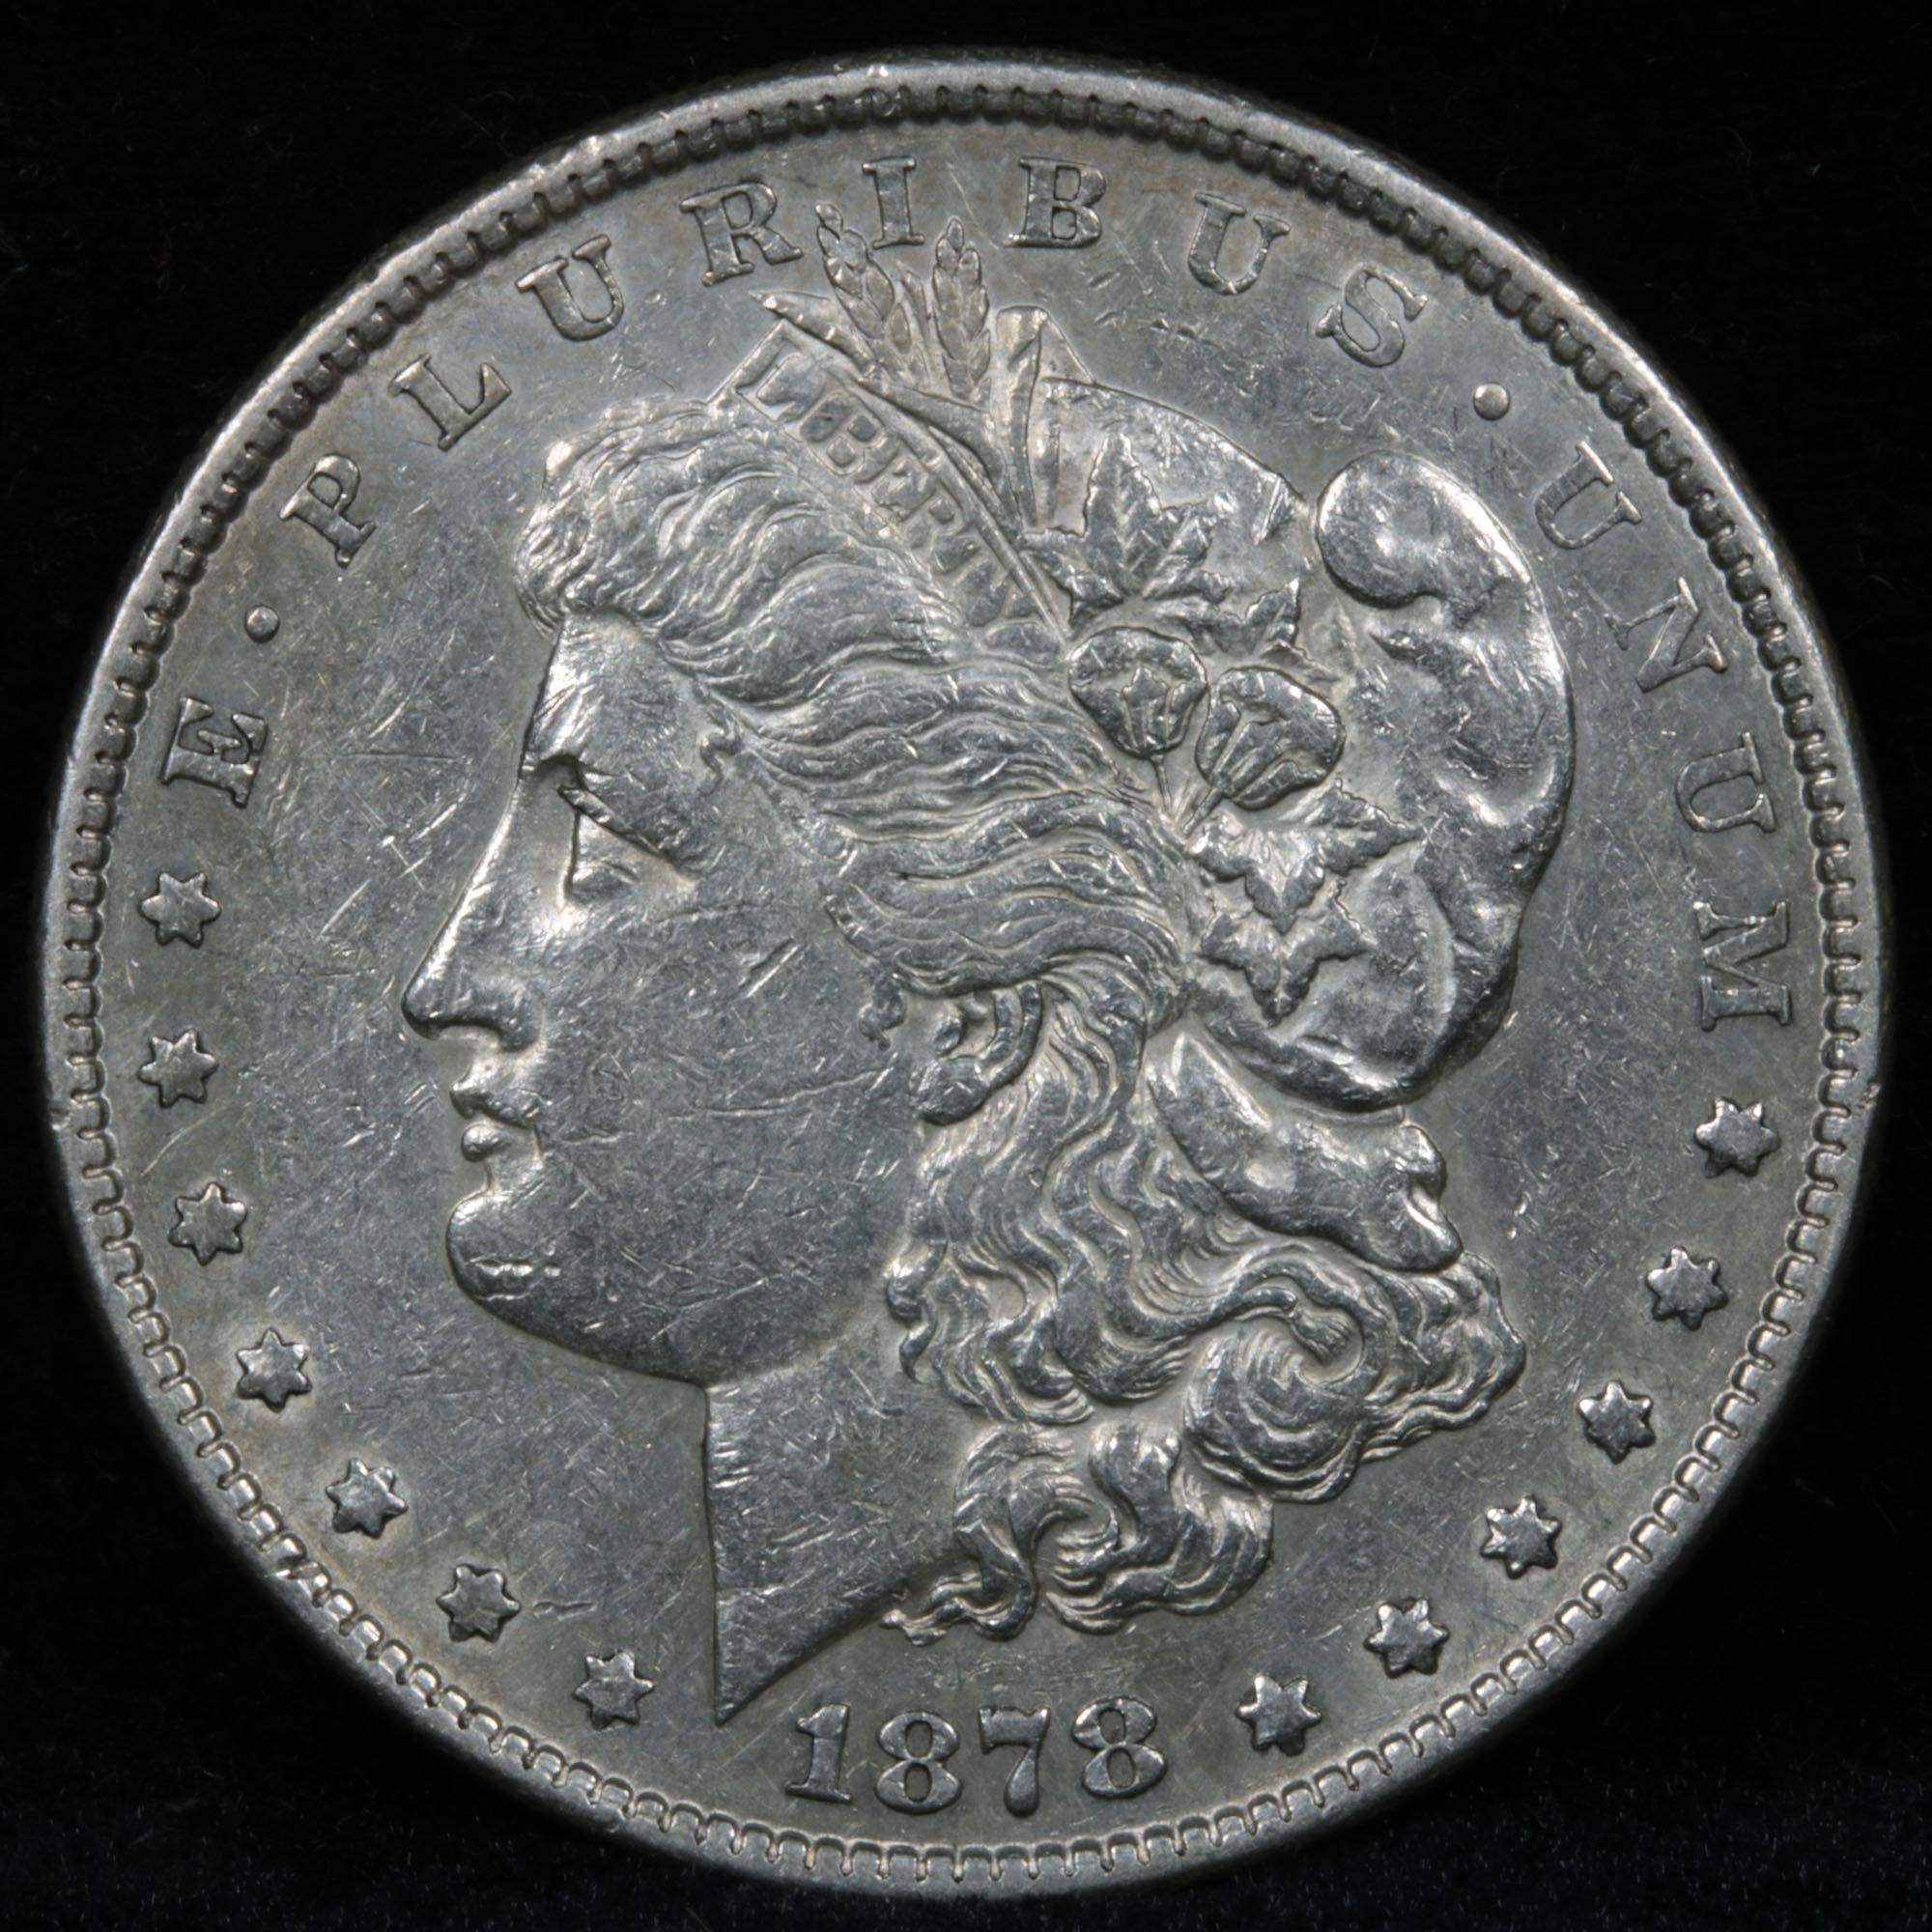 1878-s Morgan Dollar $1 Grades Select AU